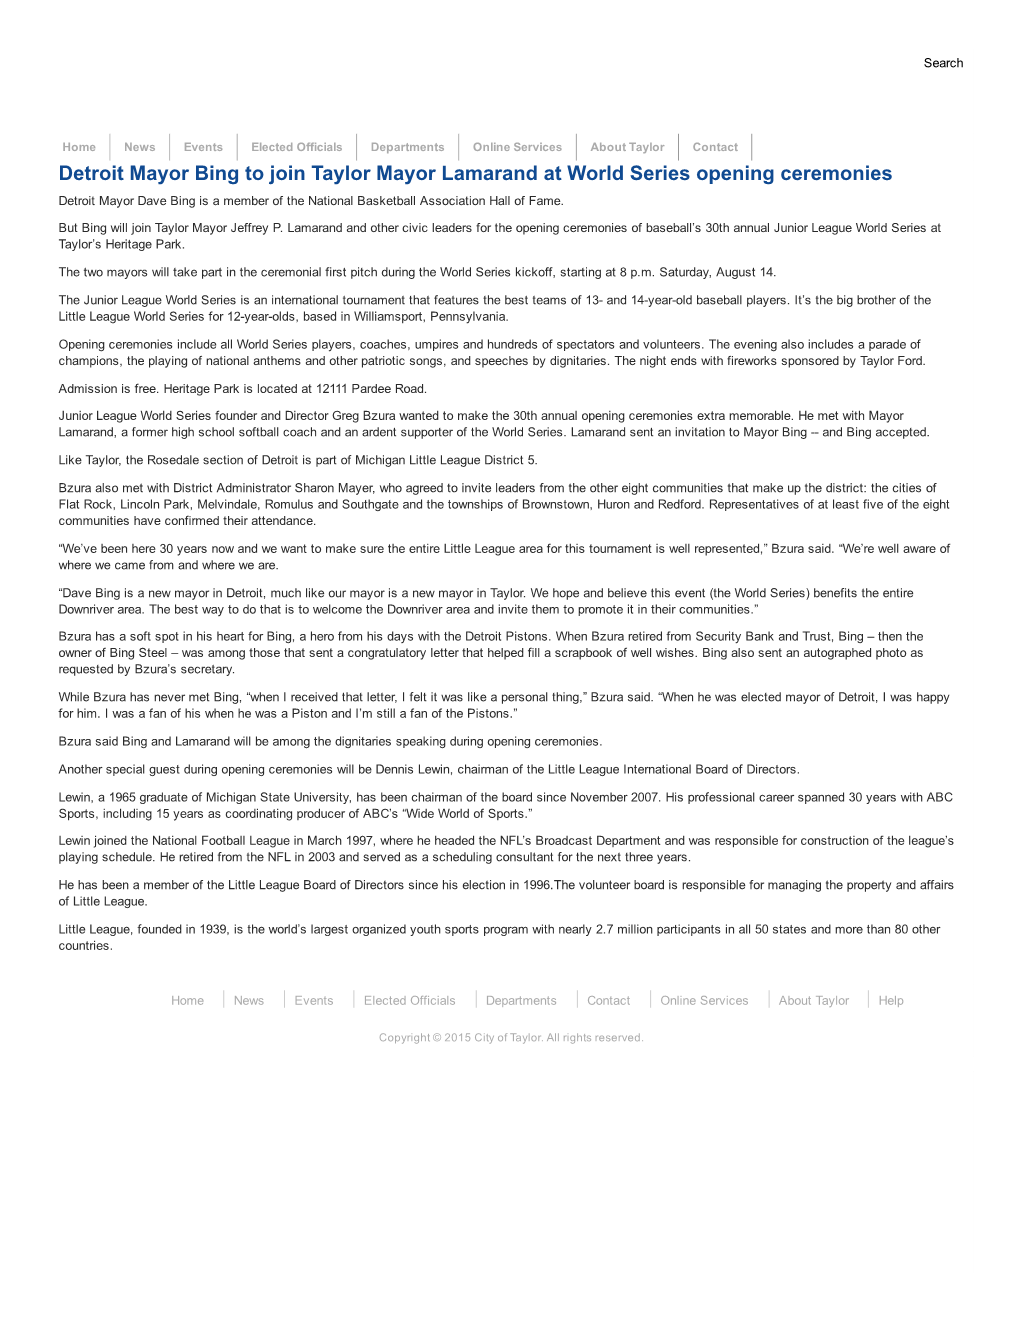 Detroit Mayor Bing to Join Taylor Mayor Lamarand at World Series Opening Ceremonies